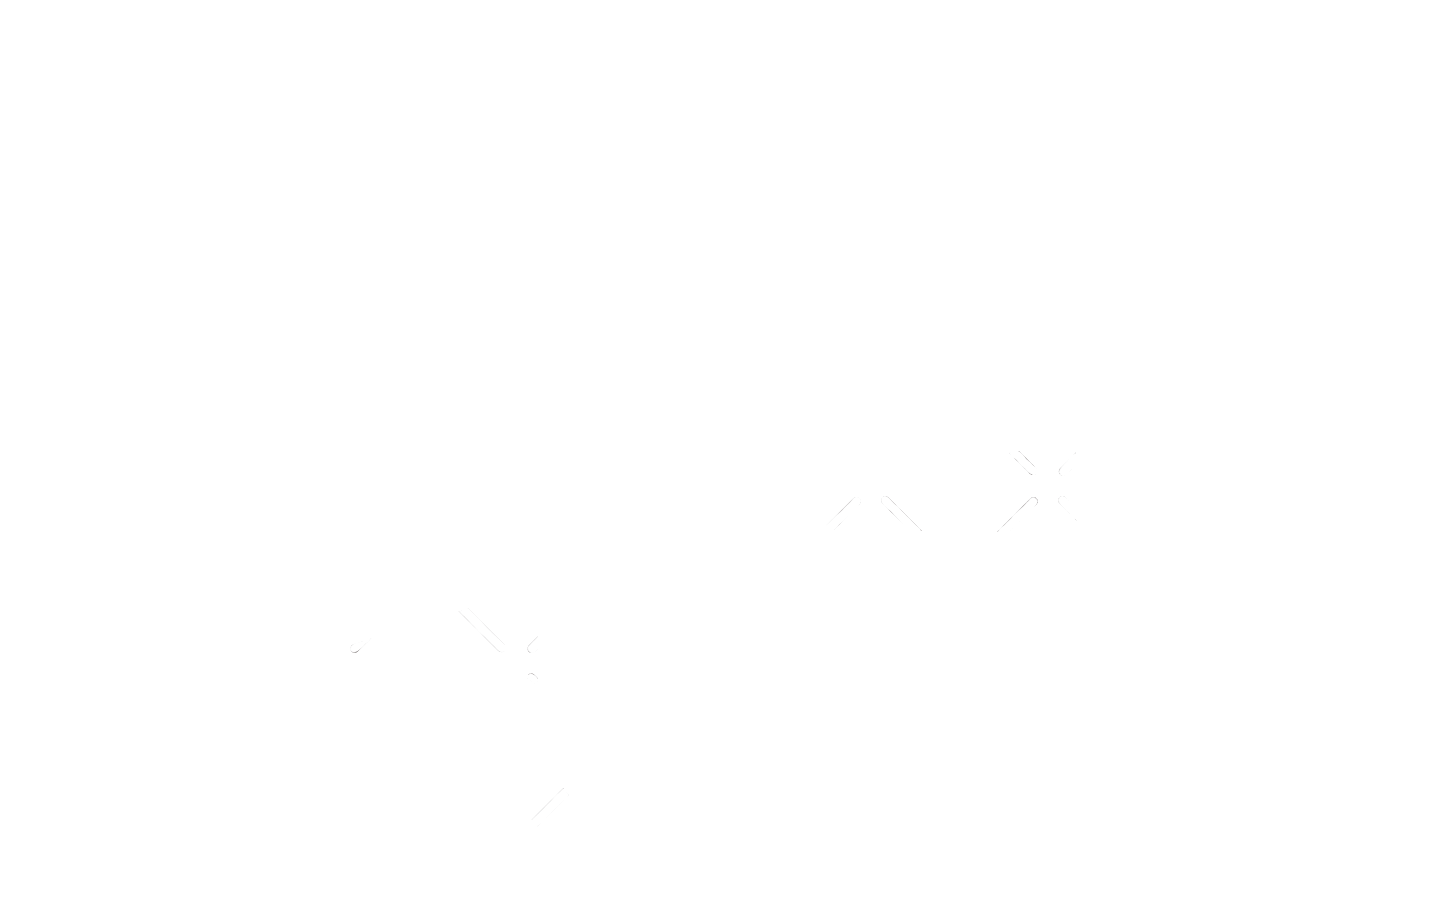 Joseph Alton Miller